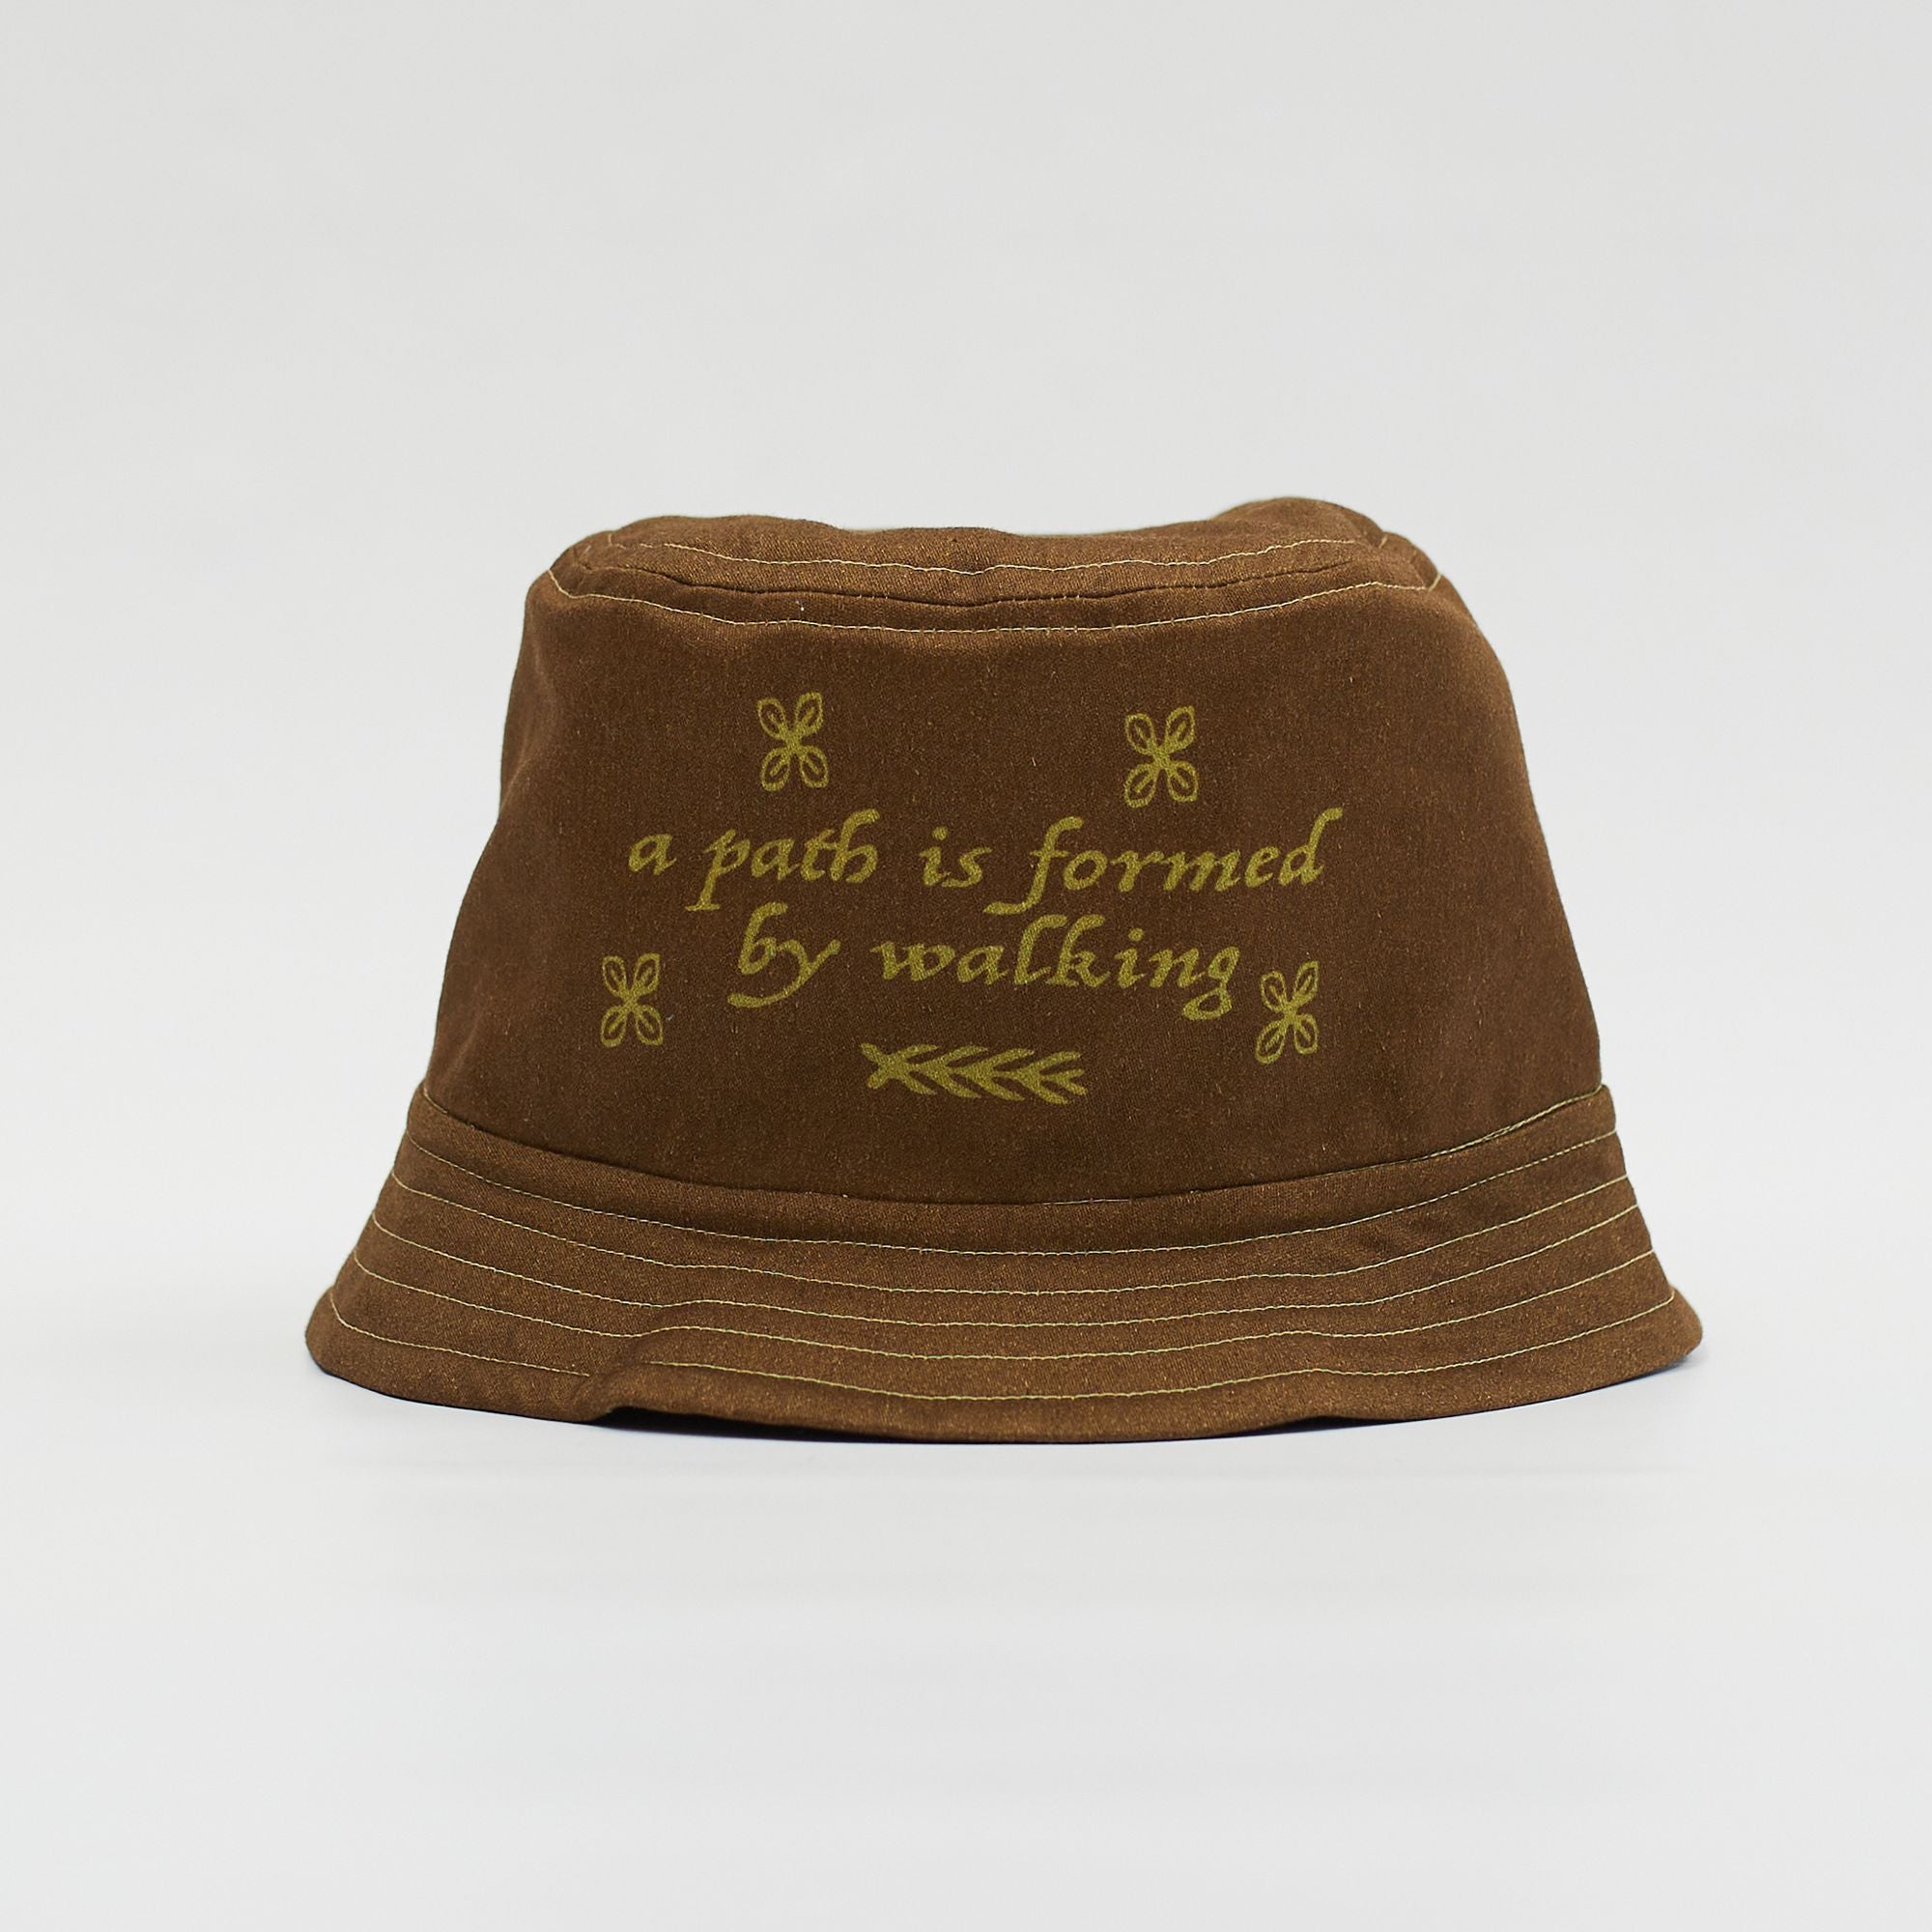 A PATH BUCKET HAT (BROWN)